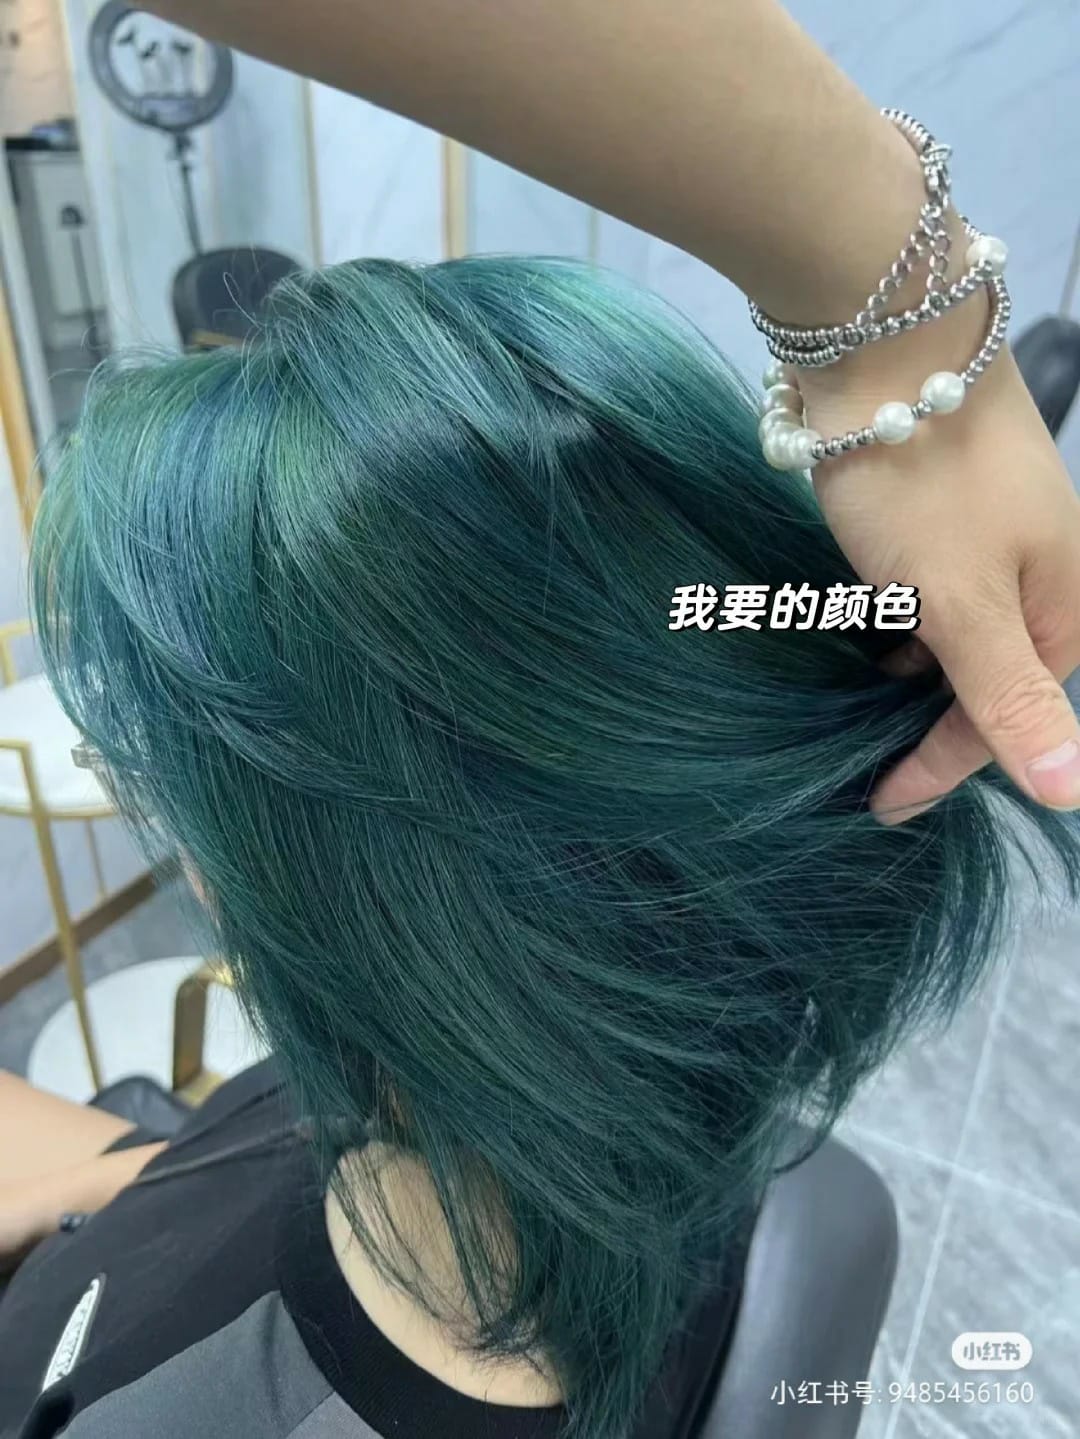 hair dye cny 2 1